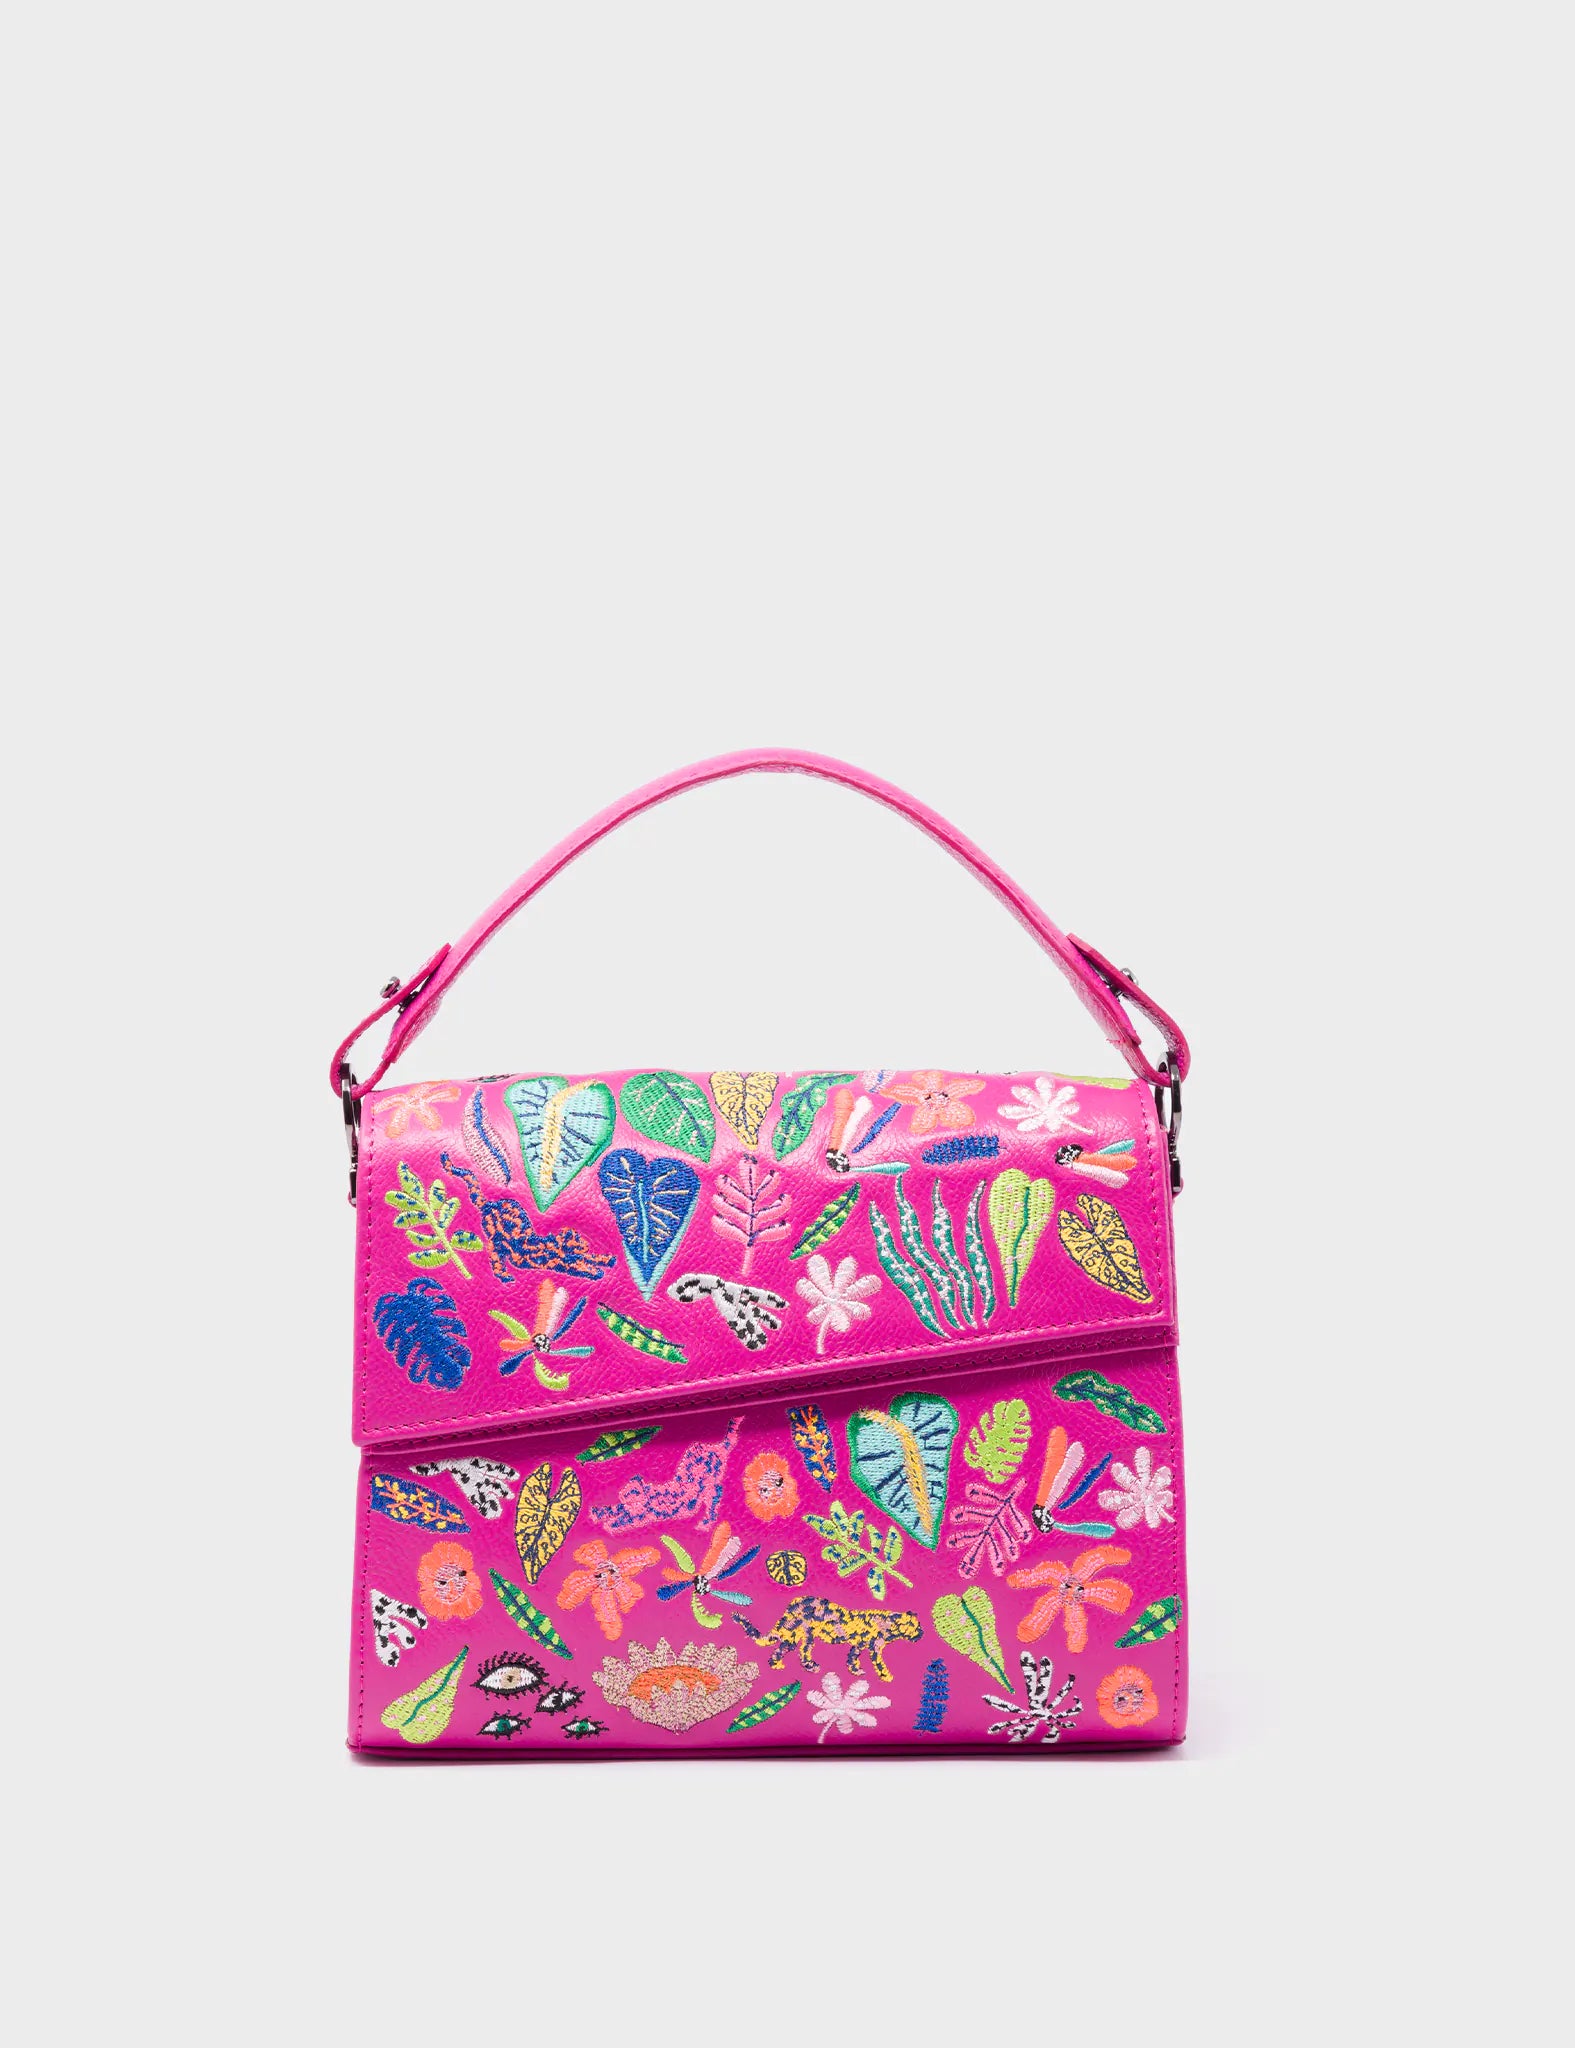 Anastasio Mini Crossbody Handbag Violet Leather - El Trópico Embroidery Design - Front